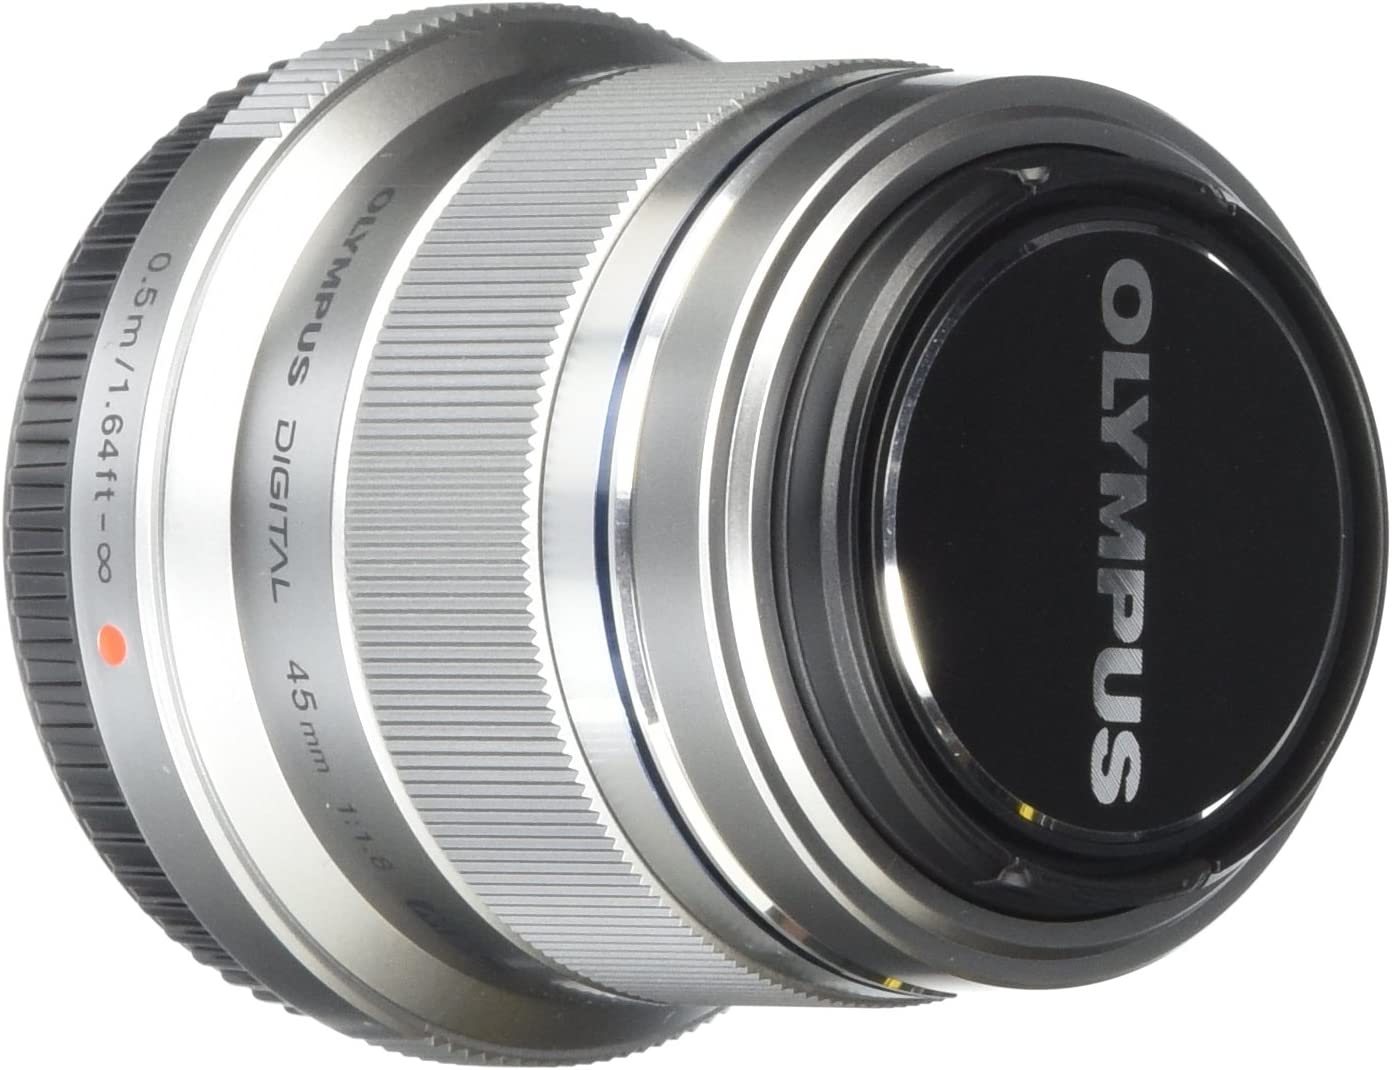 OLYMPUS Camera Lens M17F1.8 c0029 | Lazada